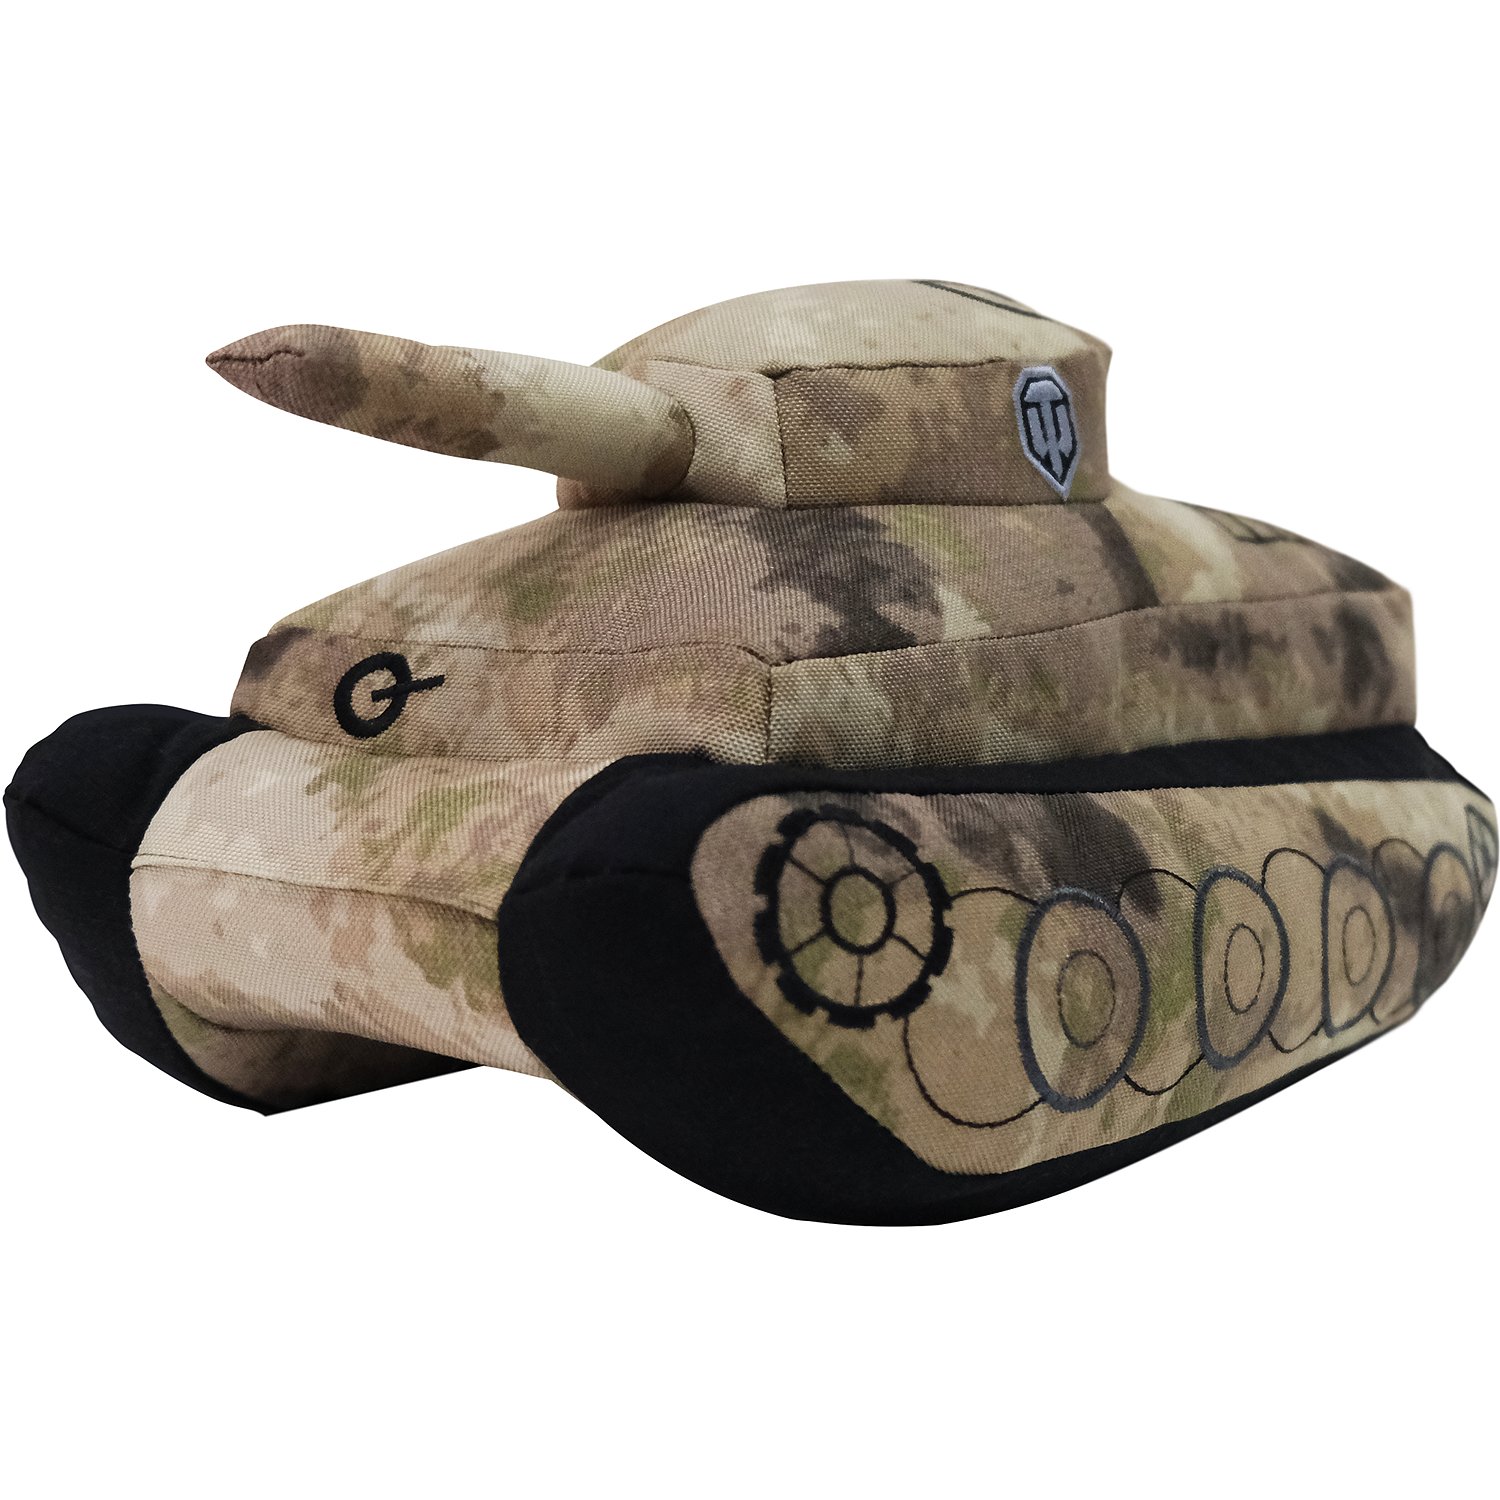 Мягкая игрушка World of Tanks World of Tanks: Танк Tiger 1 (Тигр 1)